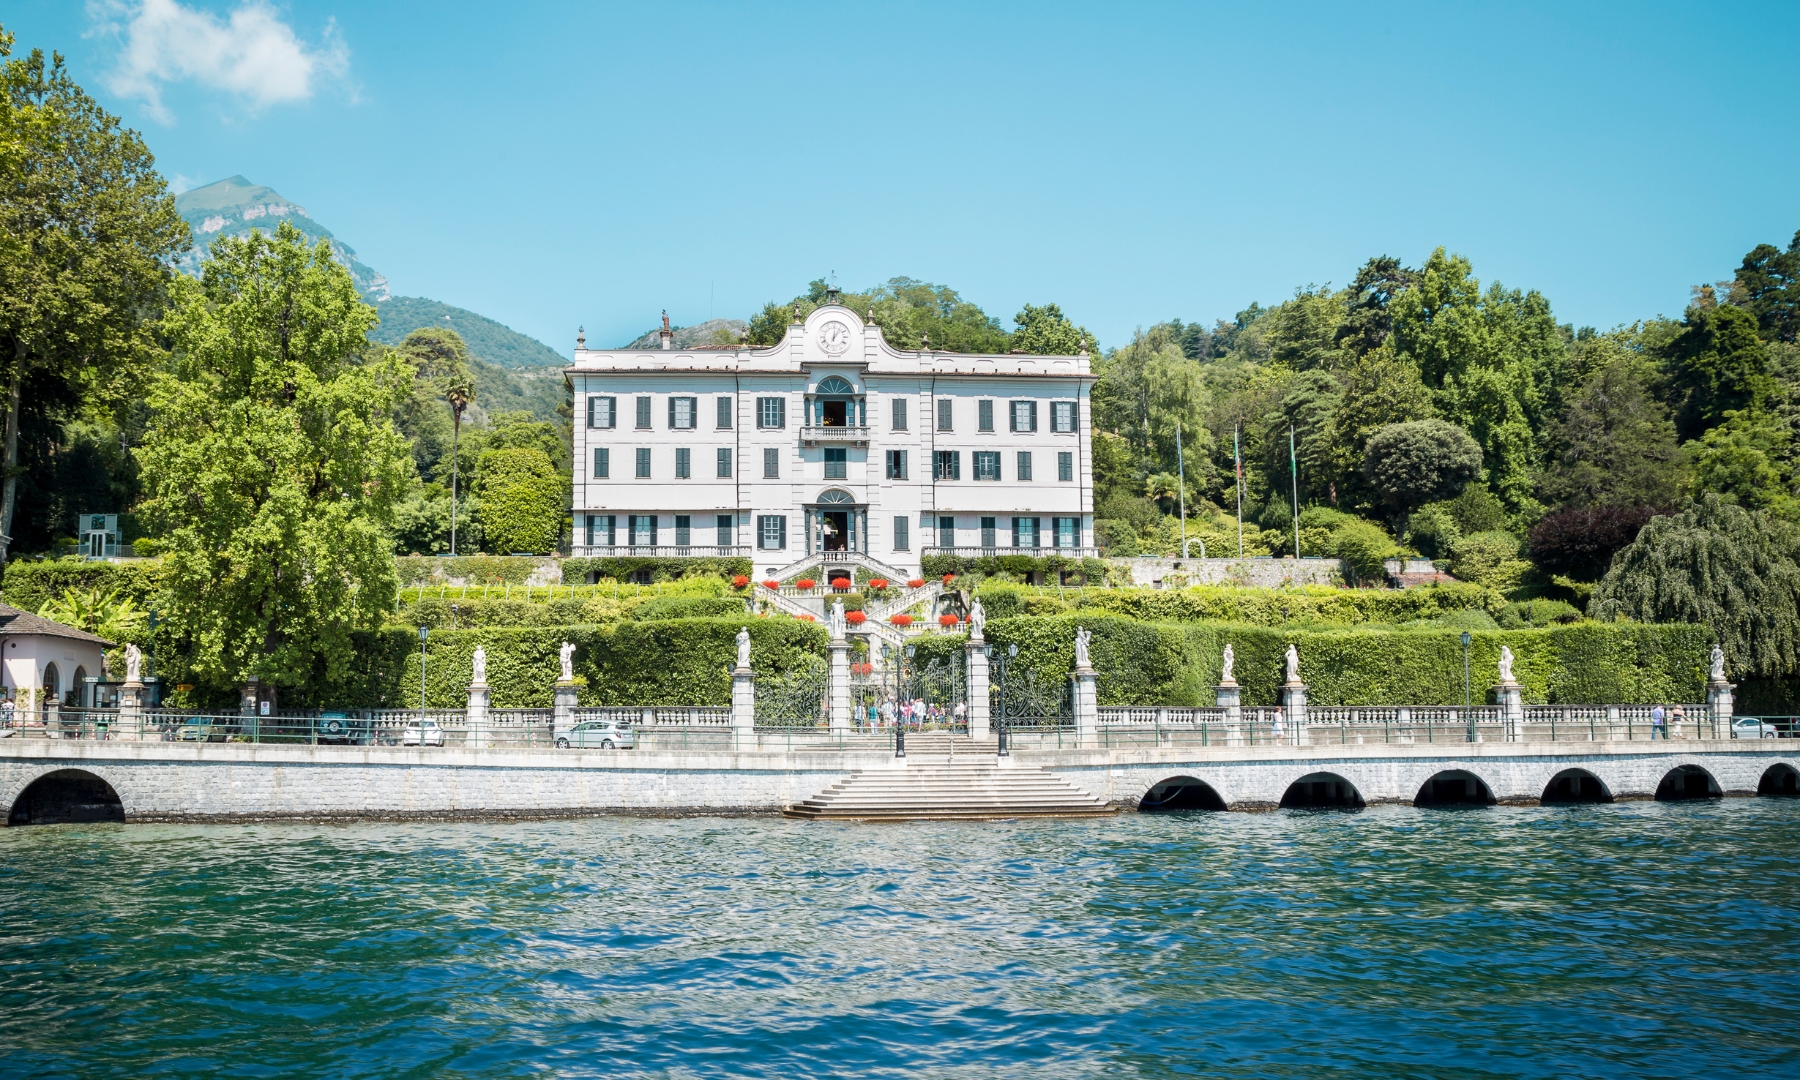 Incredible Villa Carlotta on Lake Como on approach from Bellagio Italy